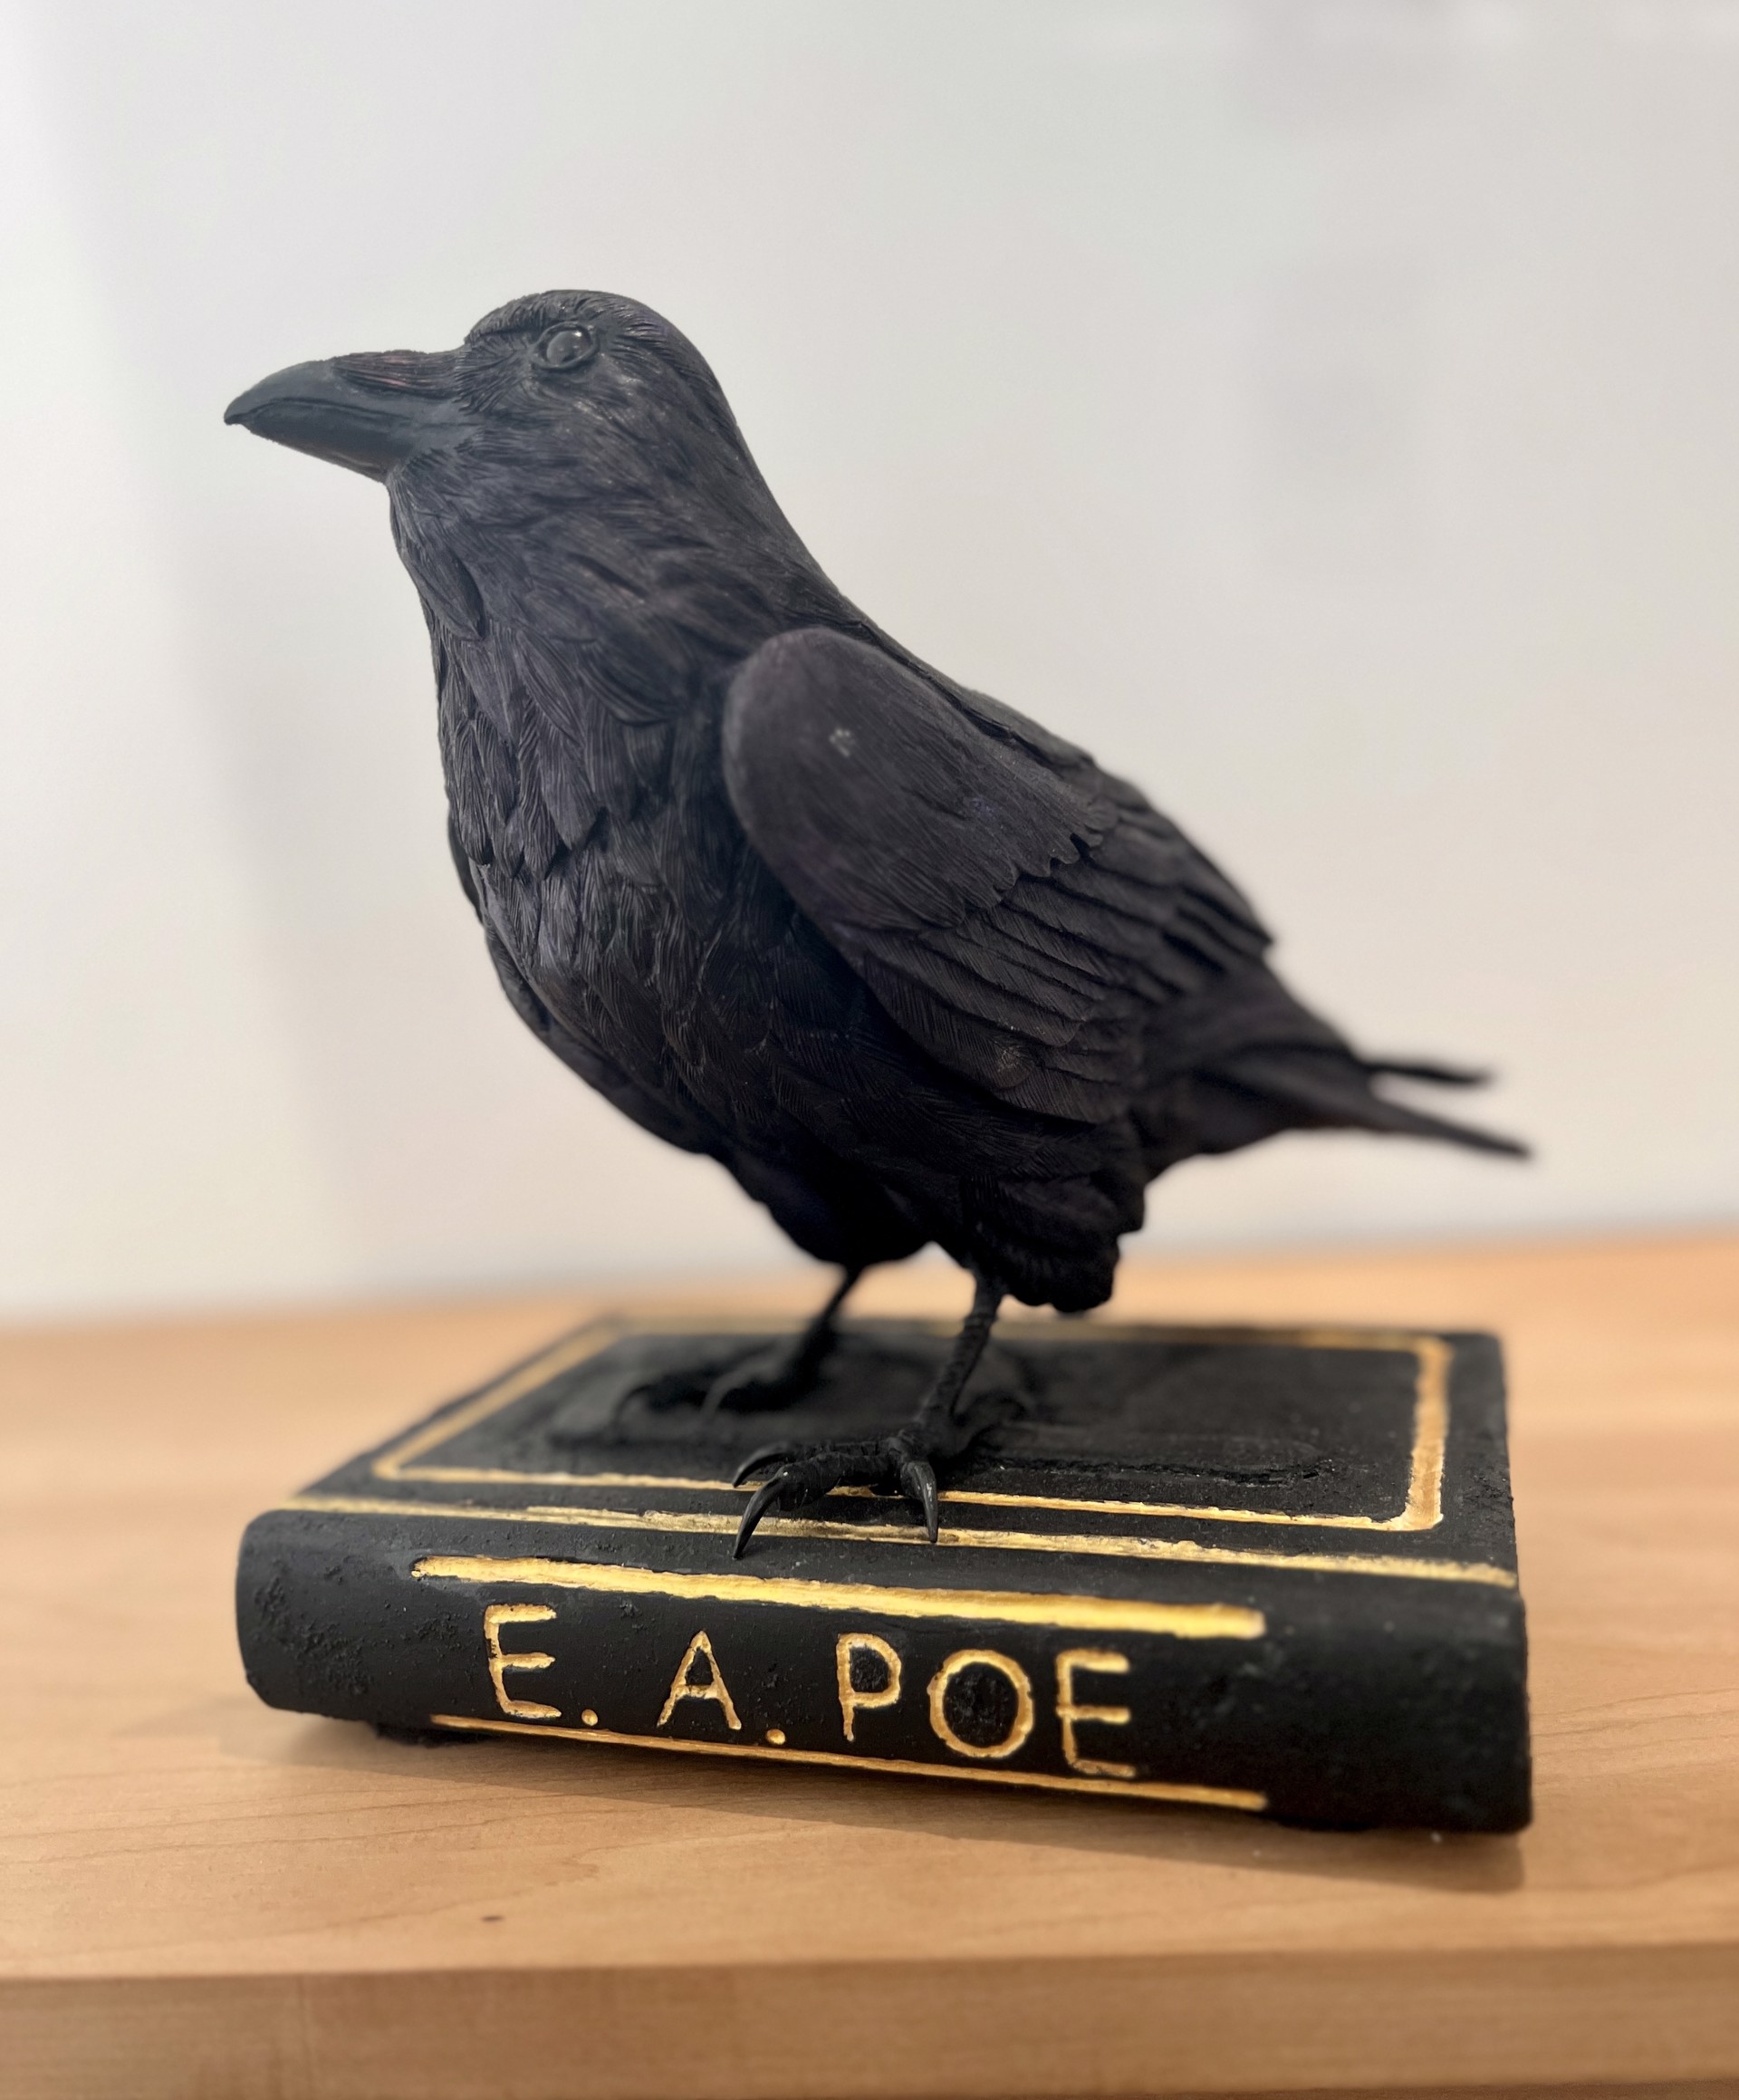 The Raven by Paul Morrisette